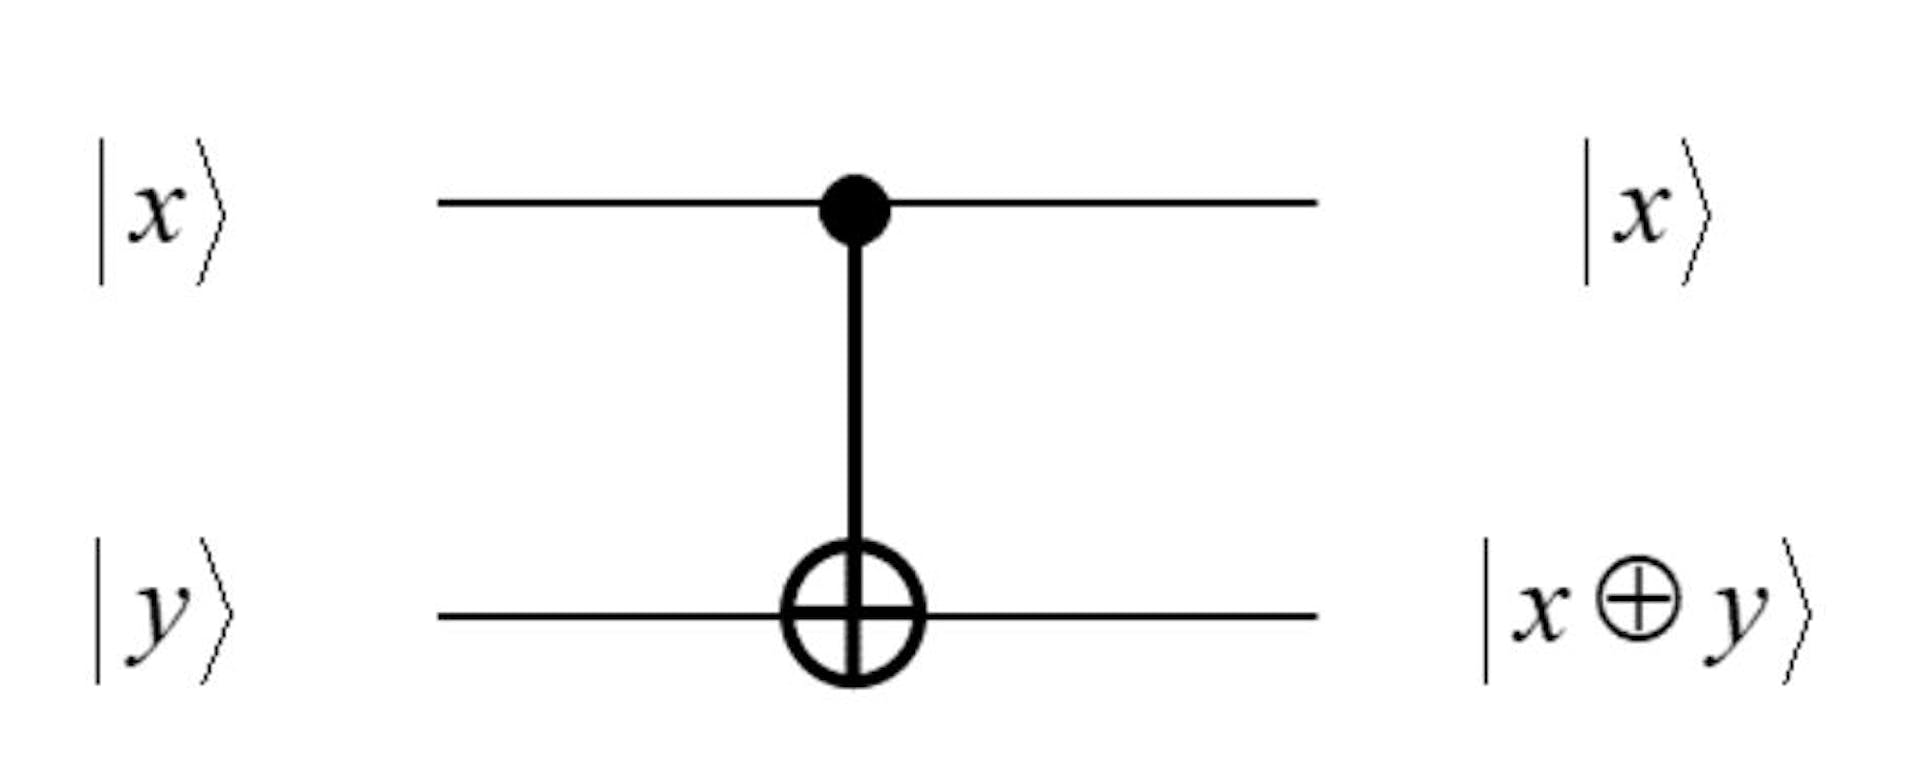 CNOT-Gate -> Quelle – https://quantumcomputing.stackexchange.com/questions/8444/input-and-output-qubit-notation-in-quantum-gates